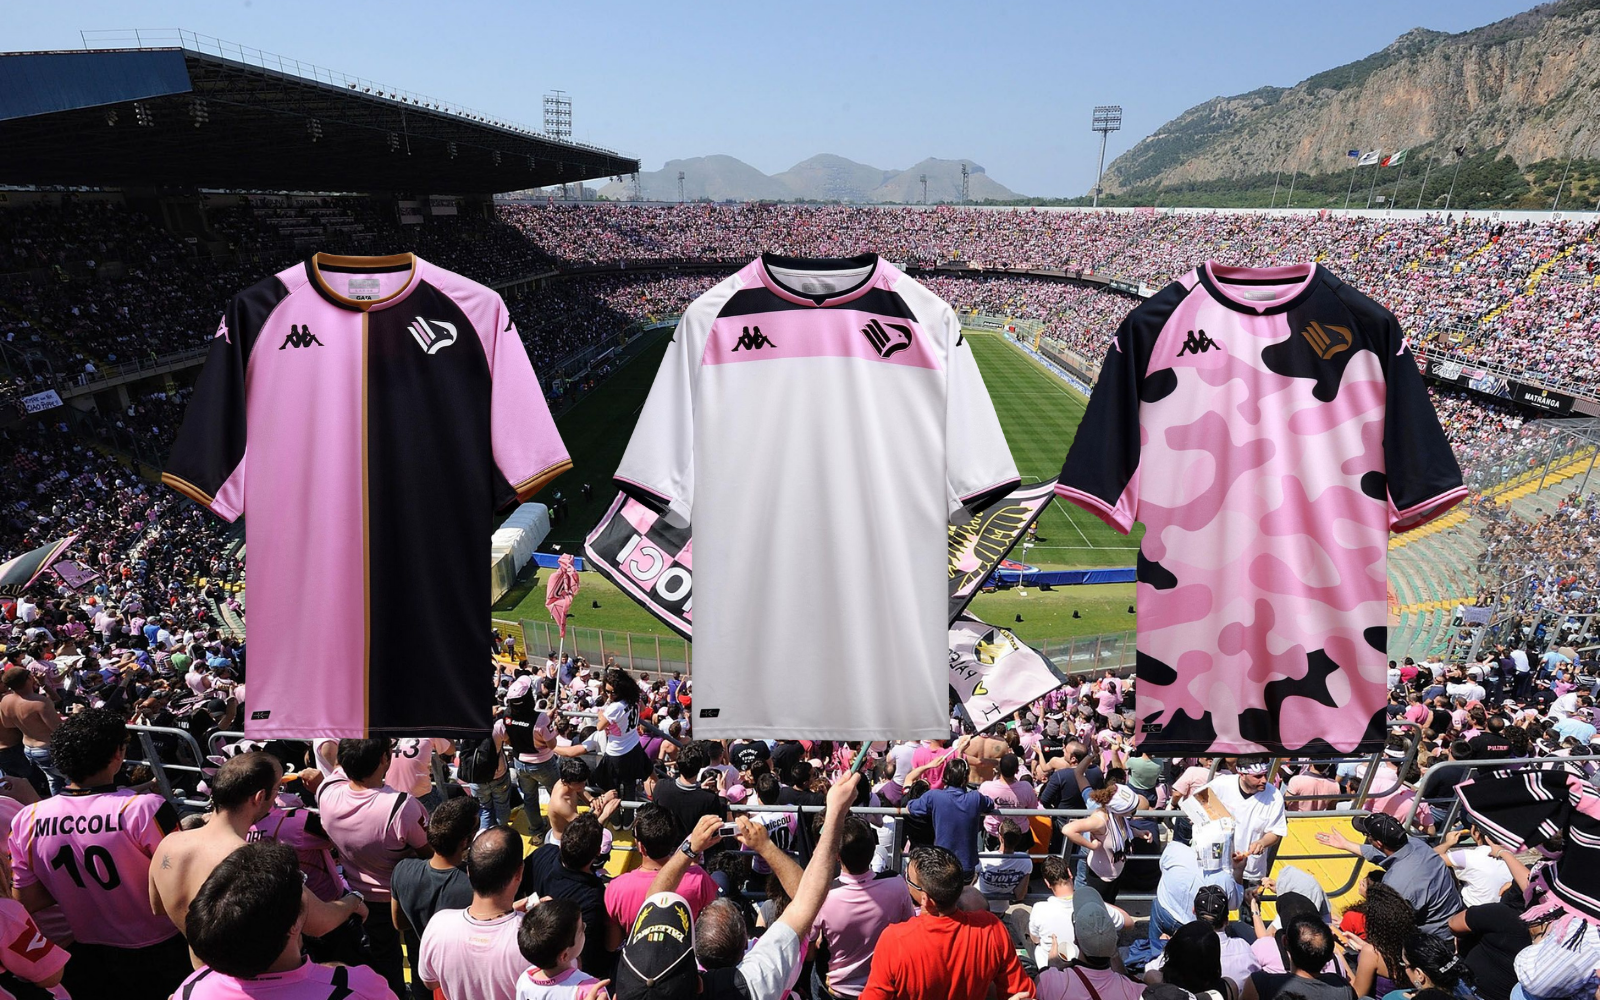 2021-22 Palermo Home Shirt - NEW